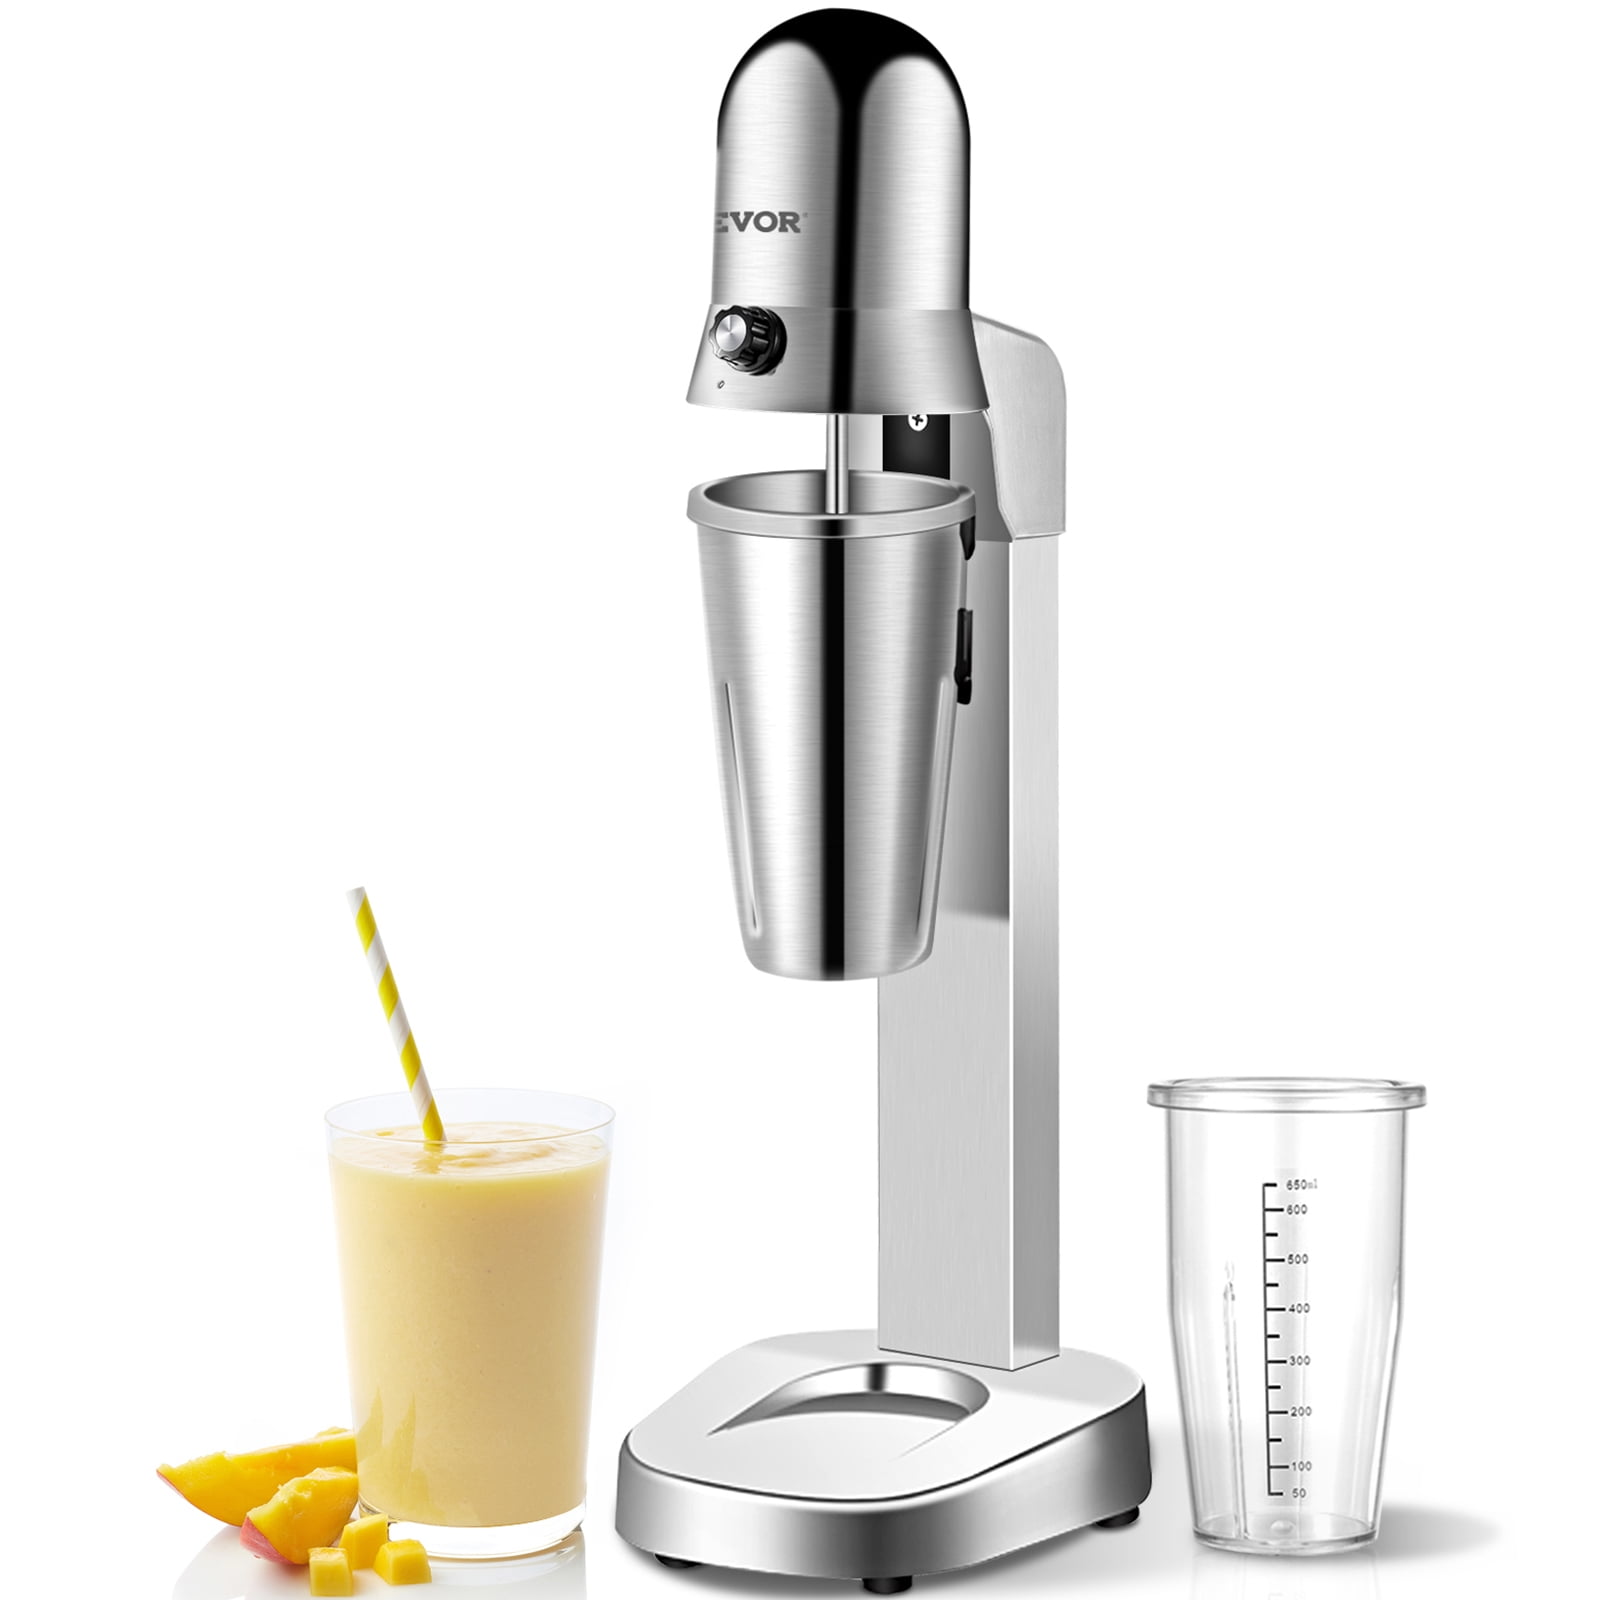 DYRABREST 180W Commercial Electric double milk shaker Maker Drink Mixer  Shake Machine Smoothie Milk Ice Cream Blender 650ML